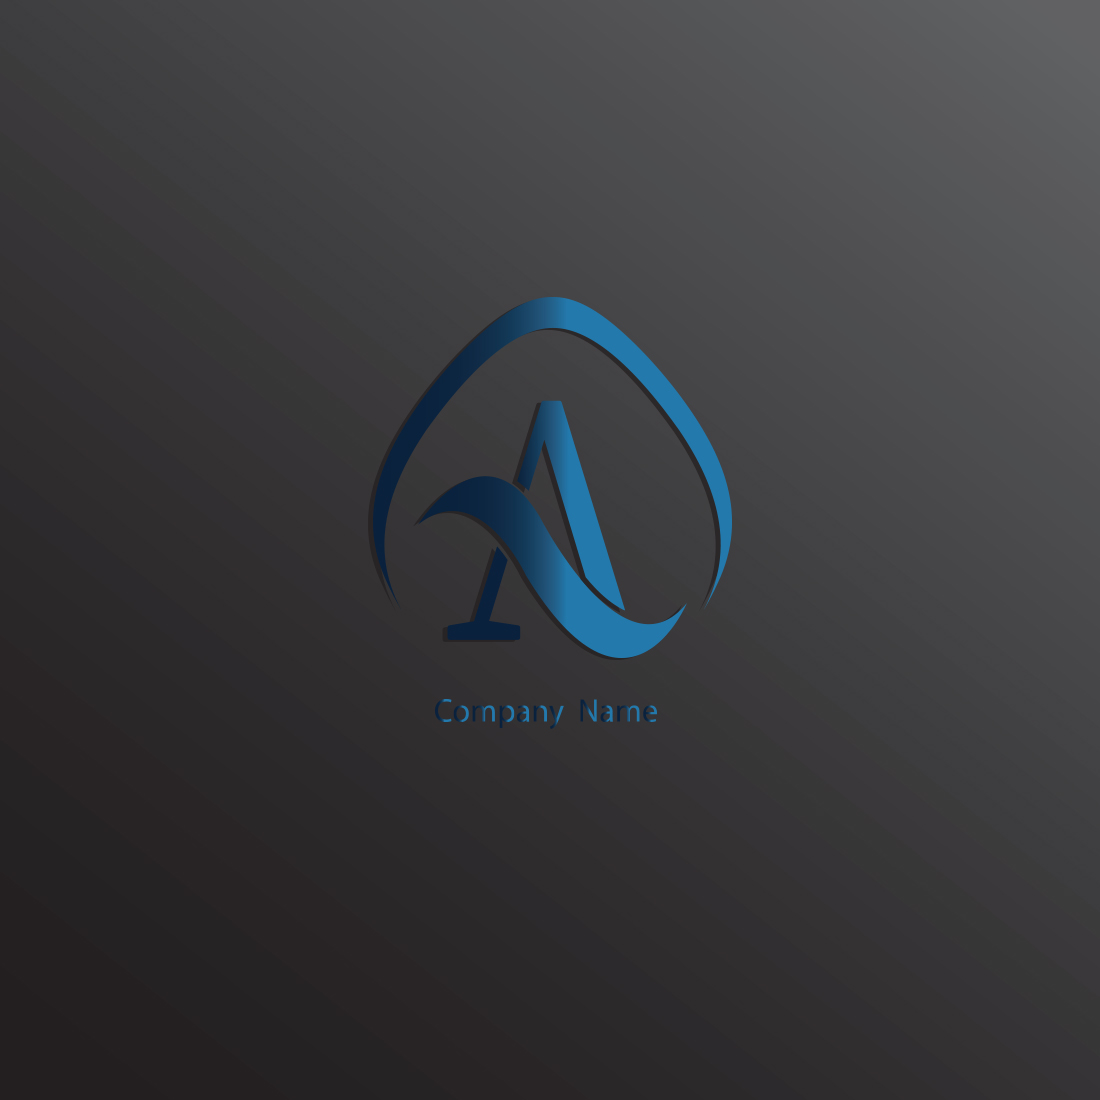 A Letter logo design cover image.